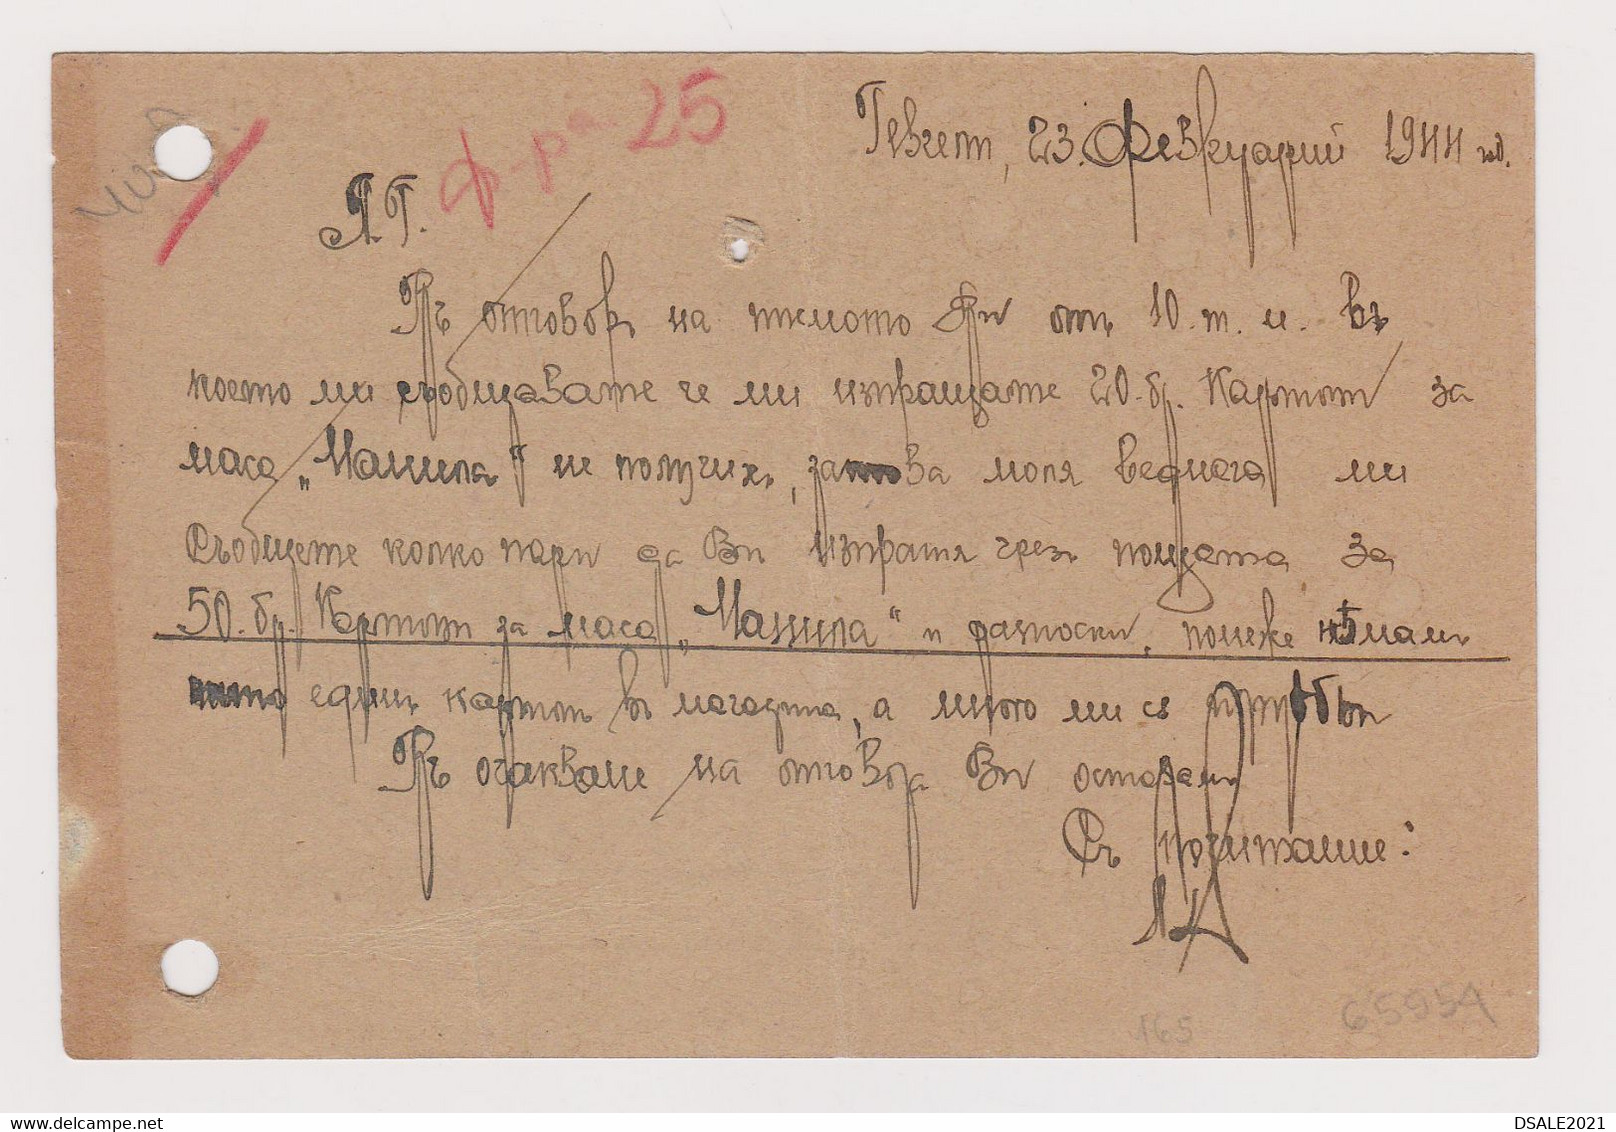 Bulgaria Bulgarie Bulgarije 1944-ww2 Entier Postal Stationery Card Bulgarian Office N. Macedonia GEVGELI Cachet (65954) - Guerre